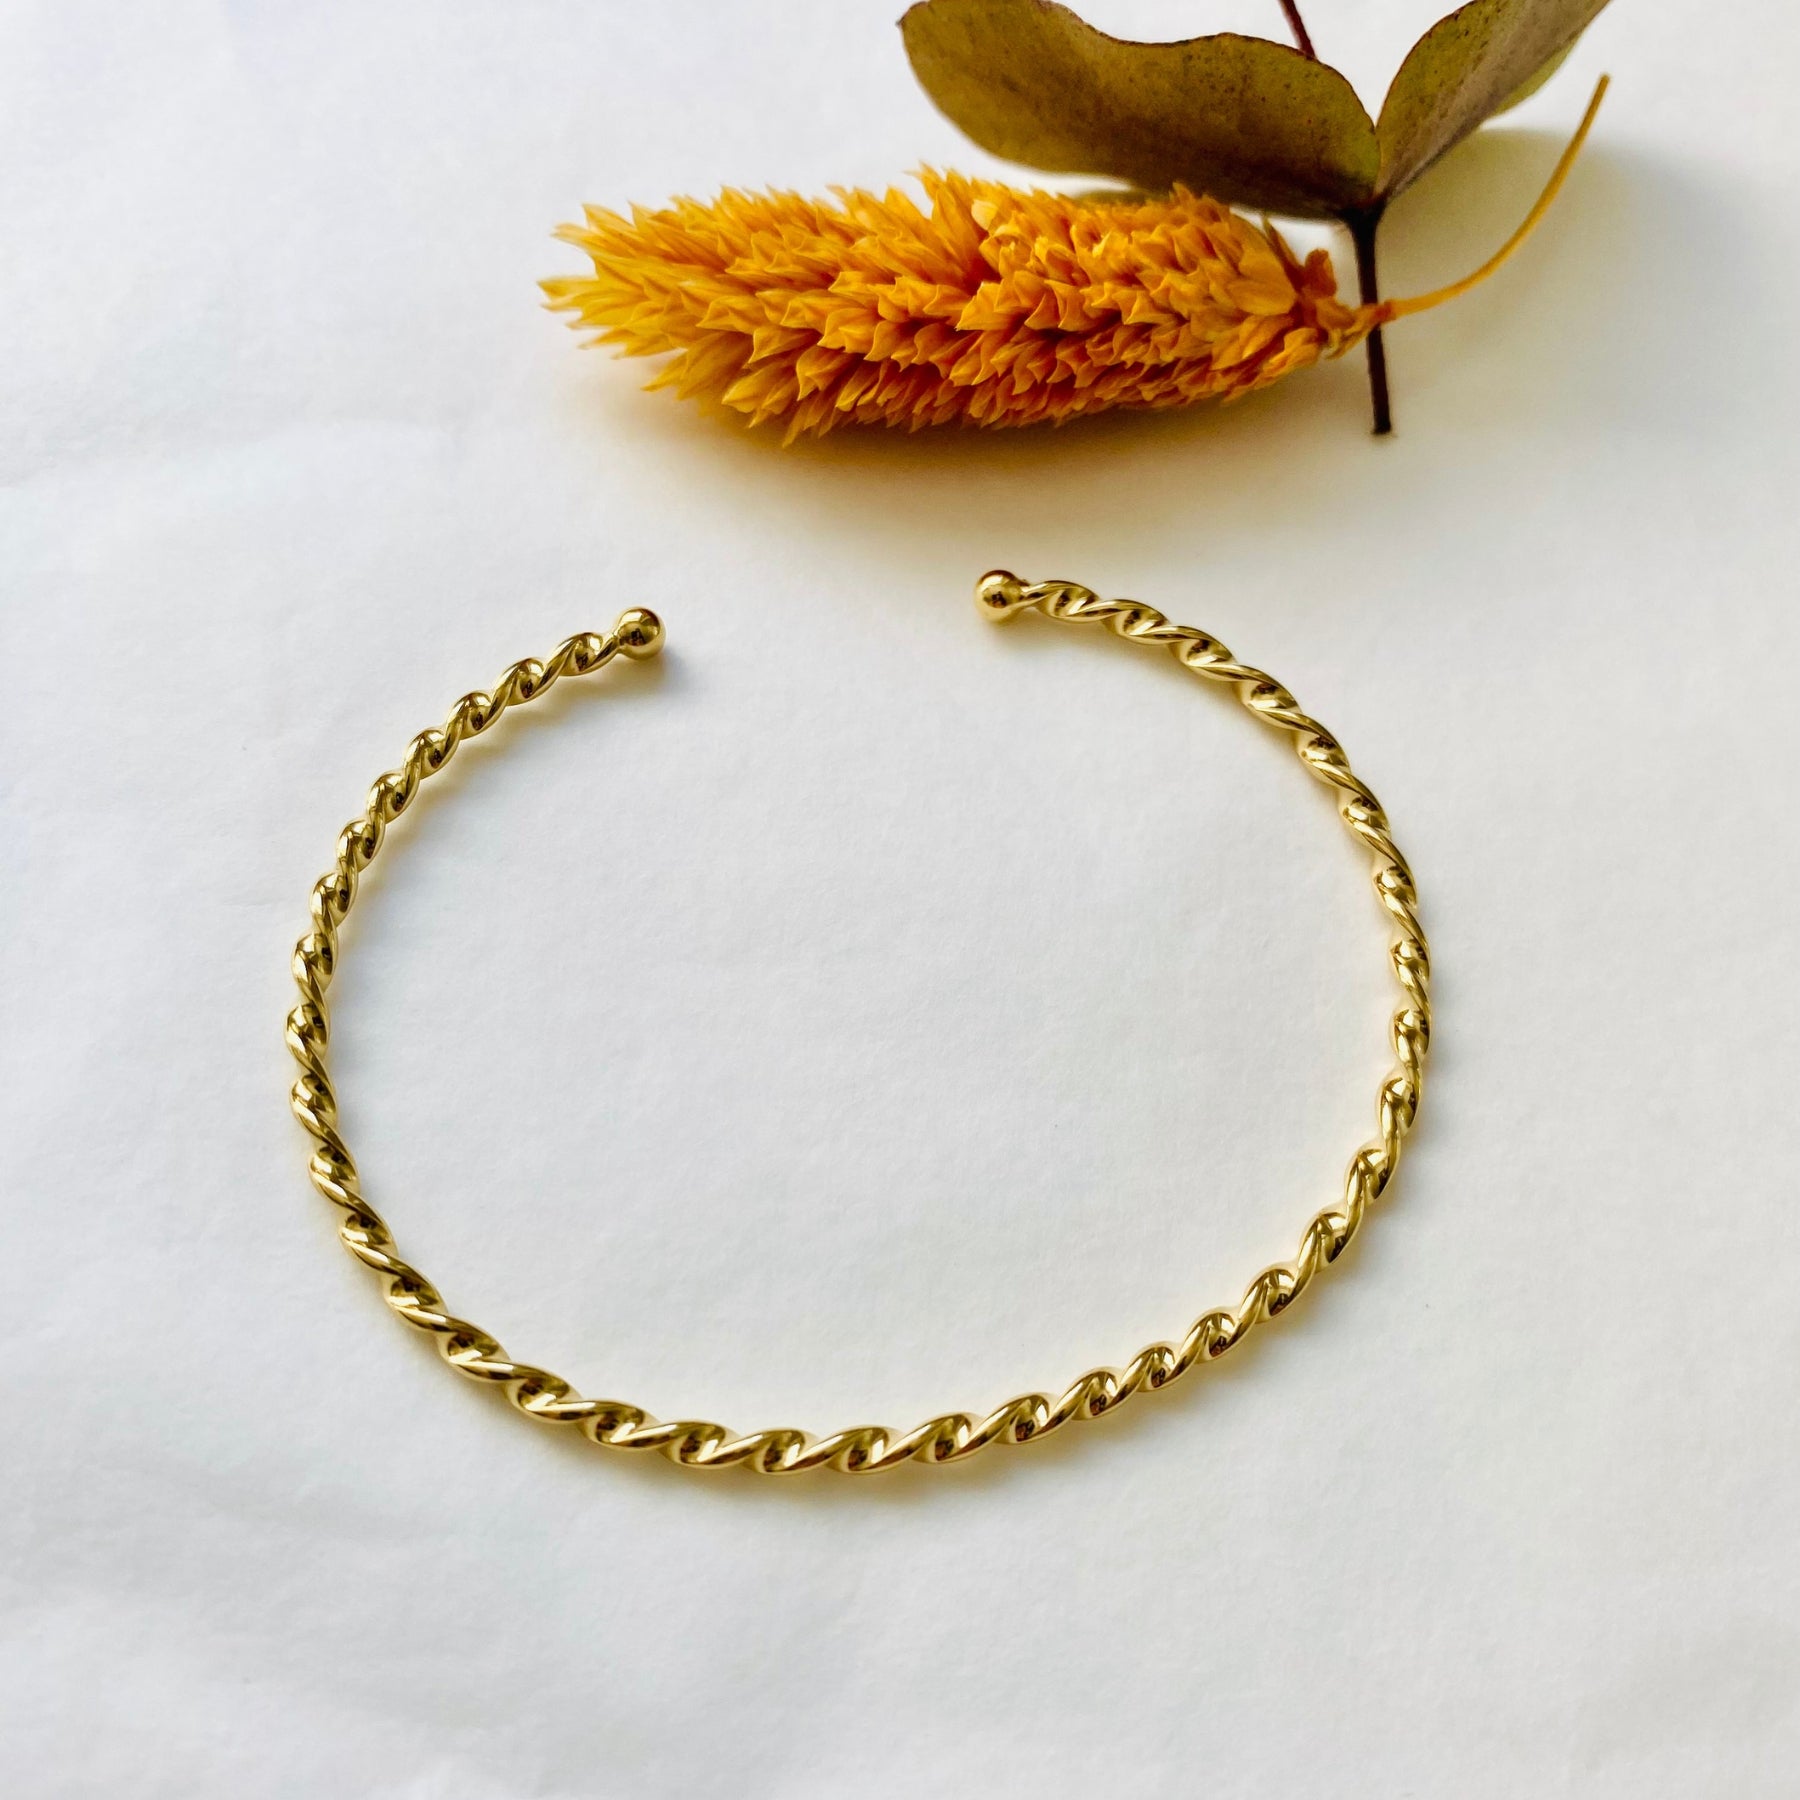 Alma gold twisted bangle bracelet